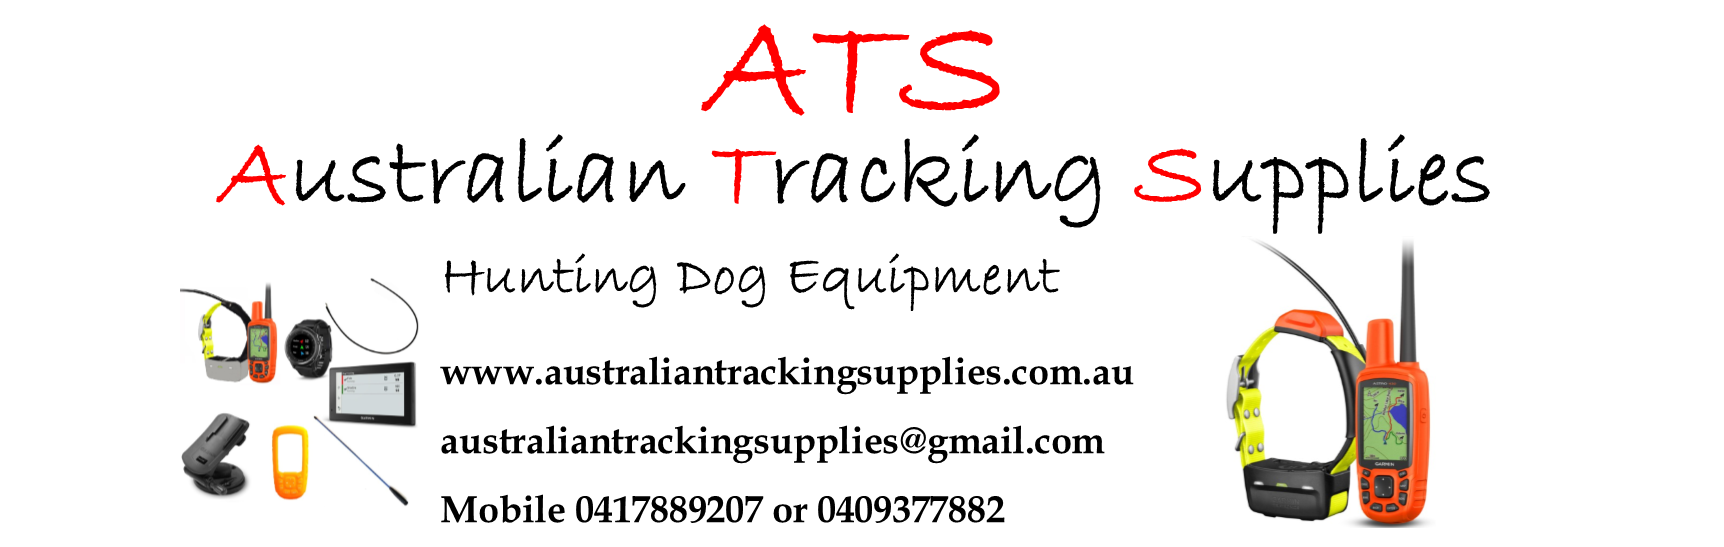 Australian Tracking Supplies